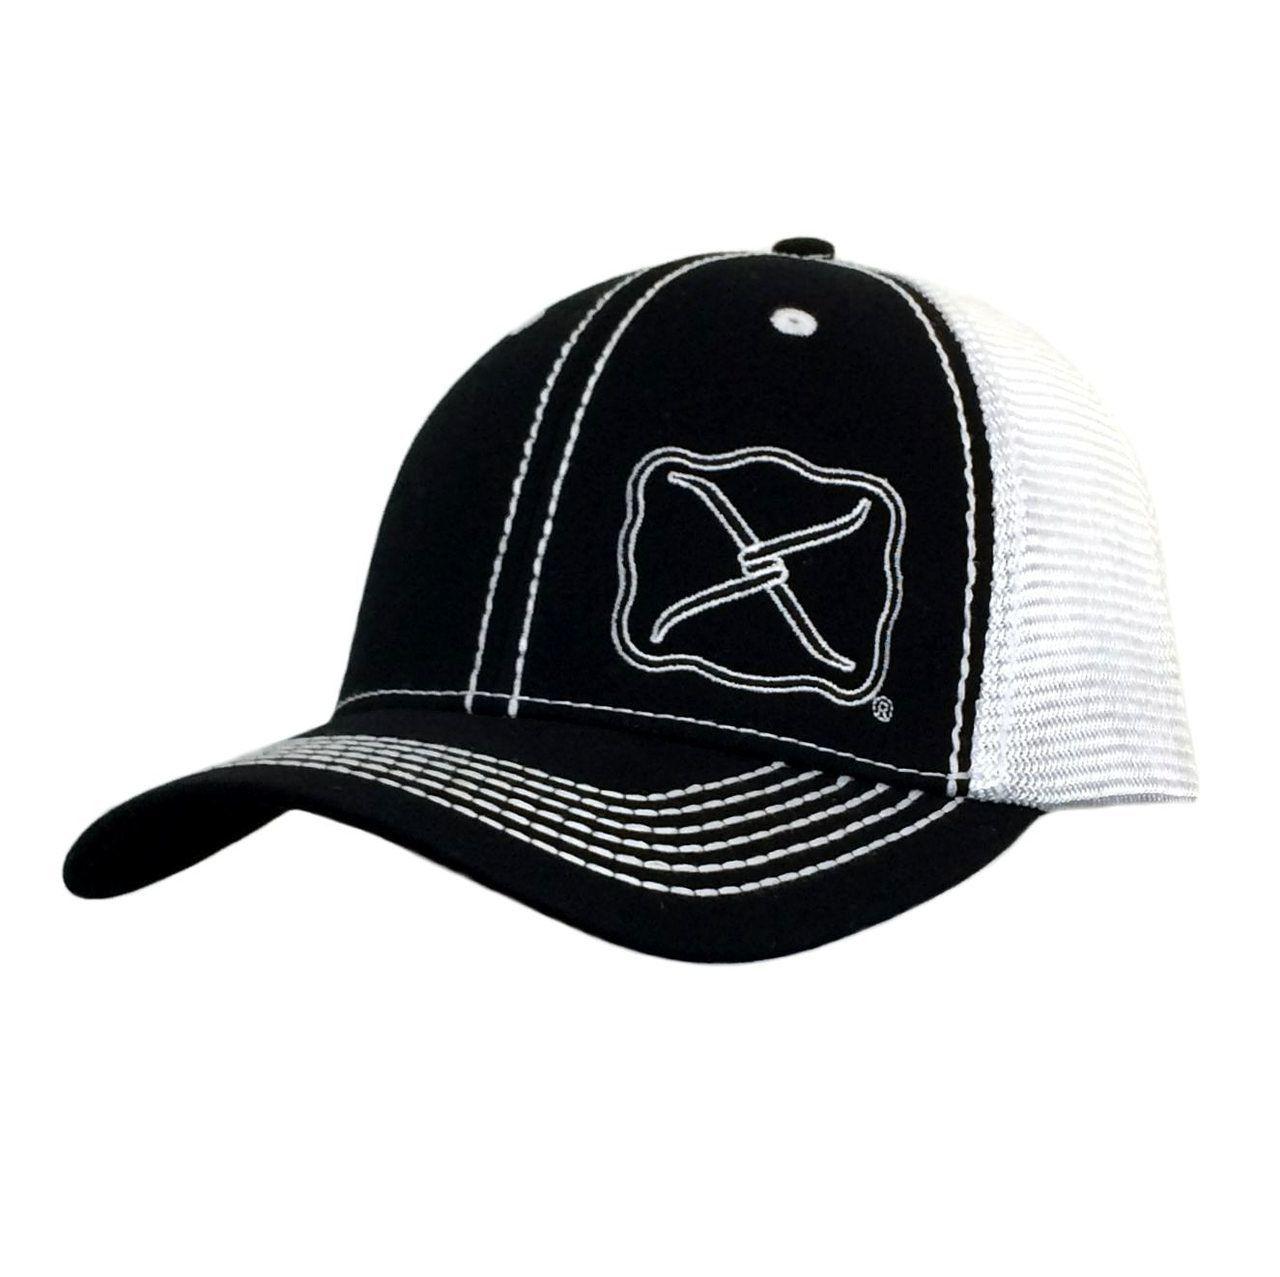 Twisted X Logo - Twisted X Black Cap | Bunkhouse Western